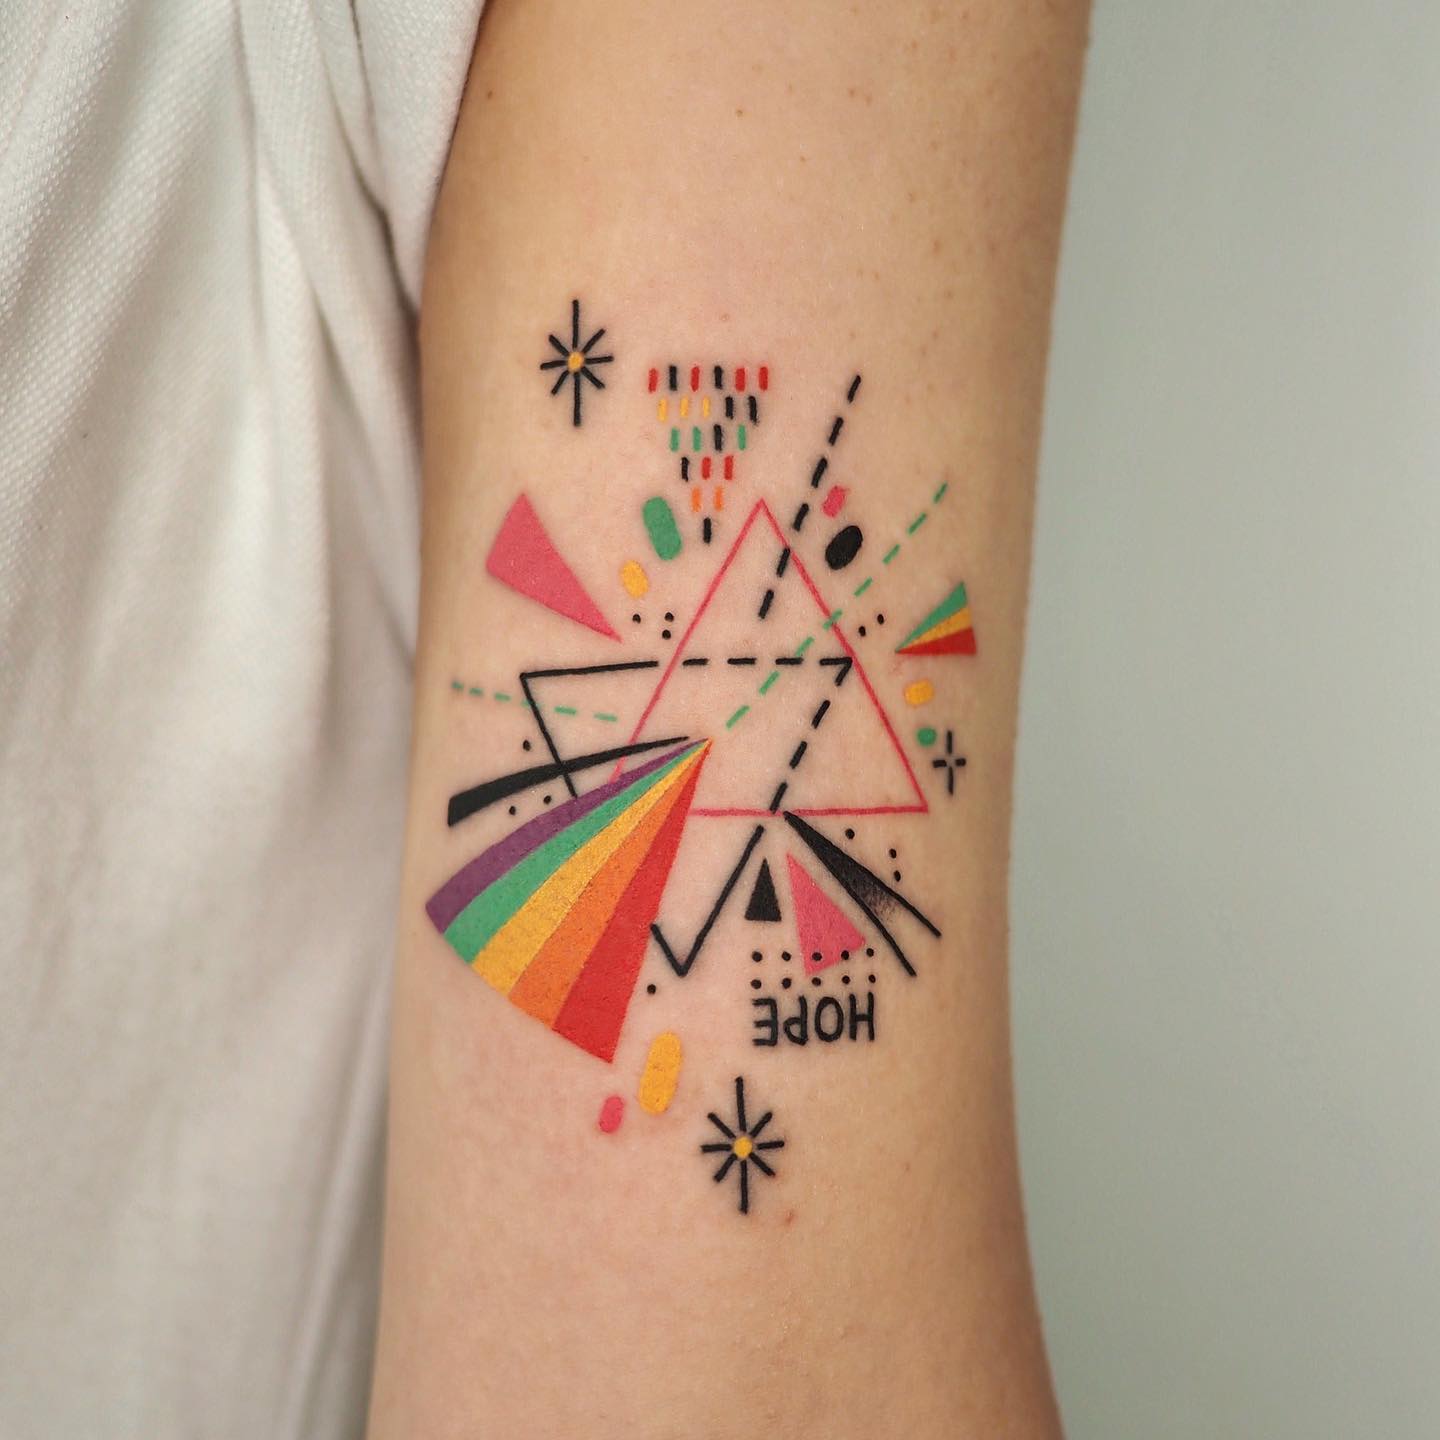 Penrose triangle tattoo on the sternum - Tattoogrid.net